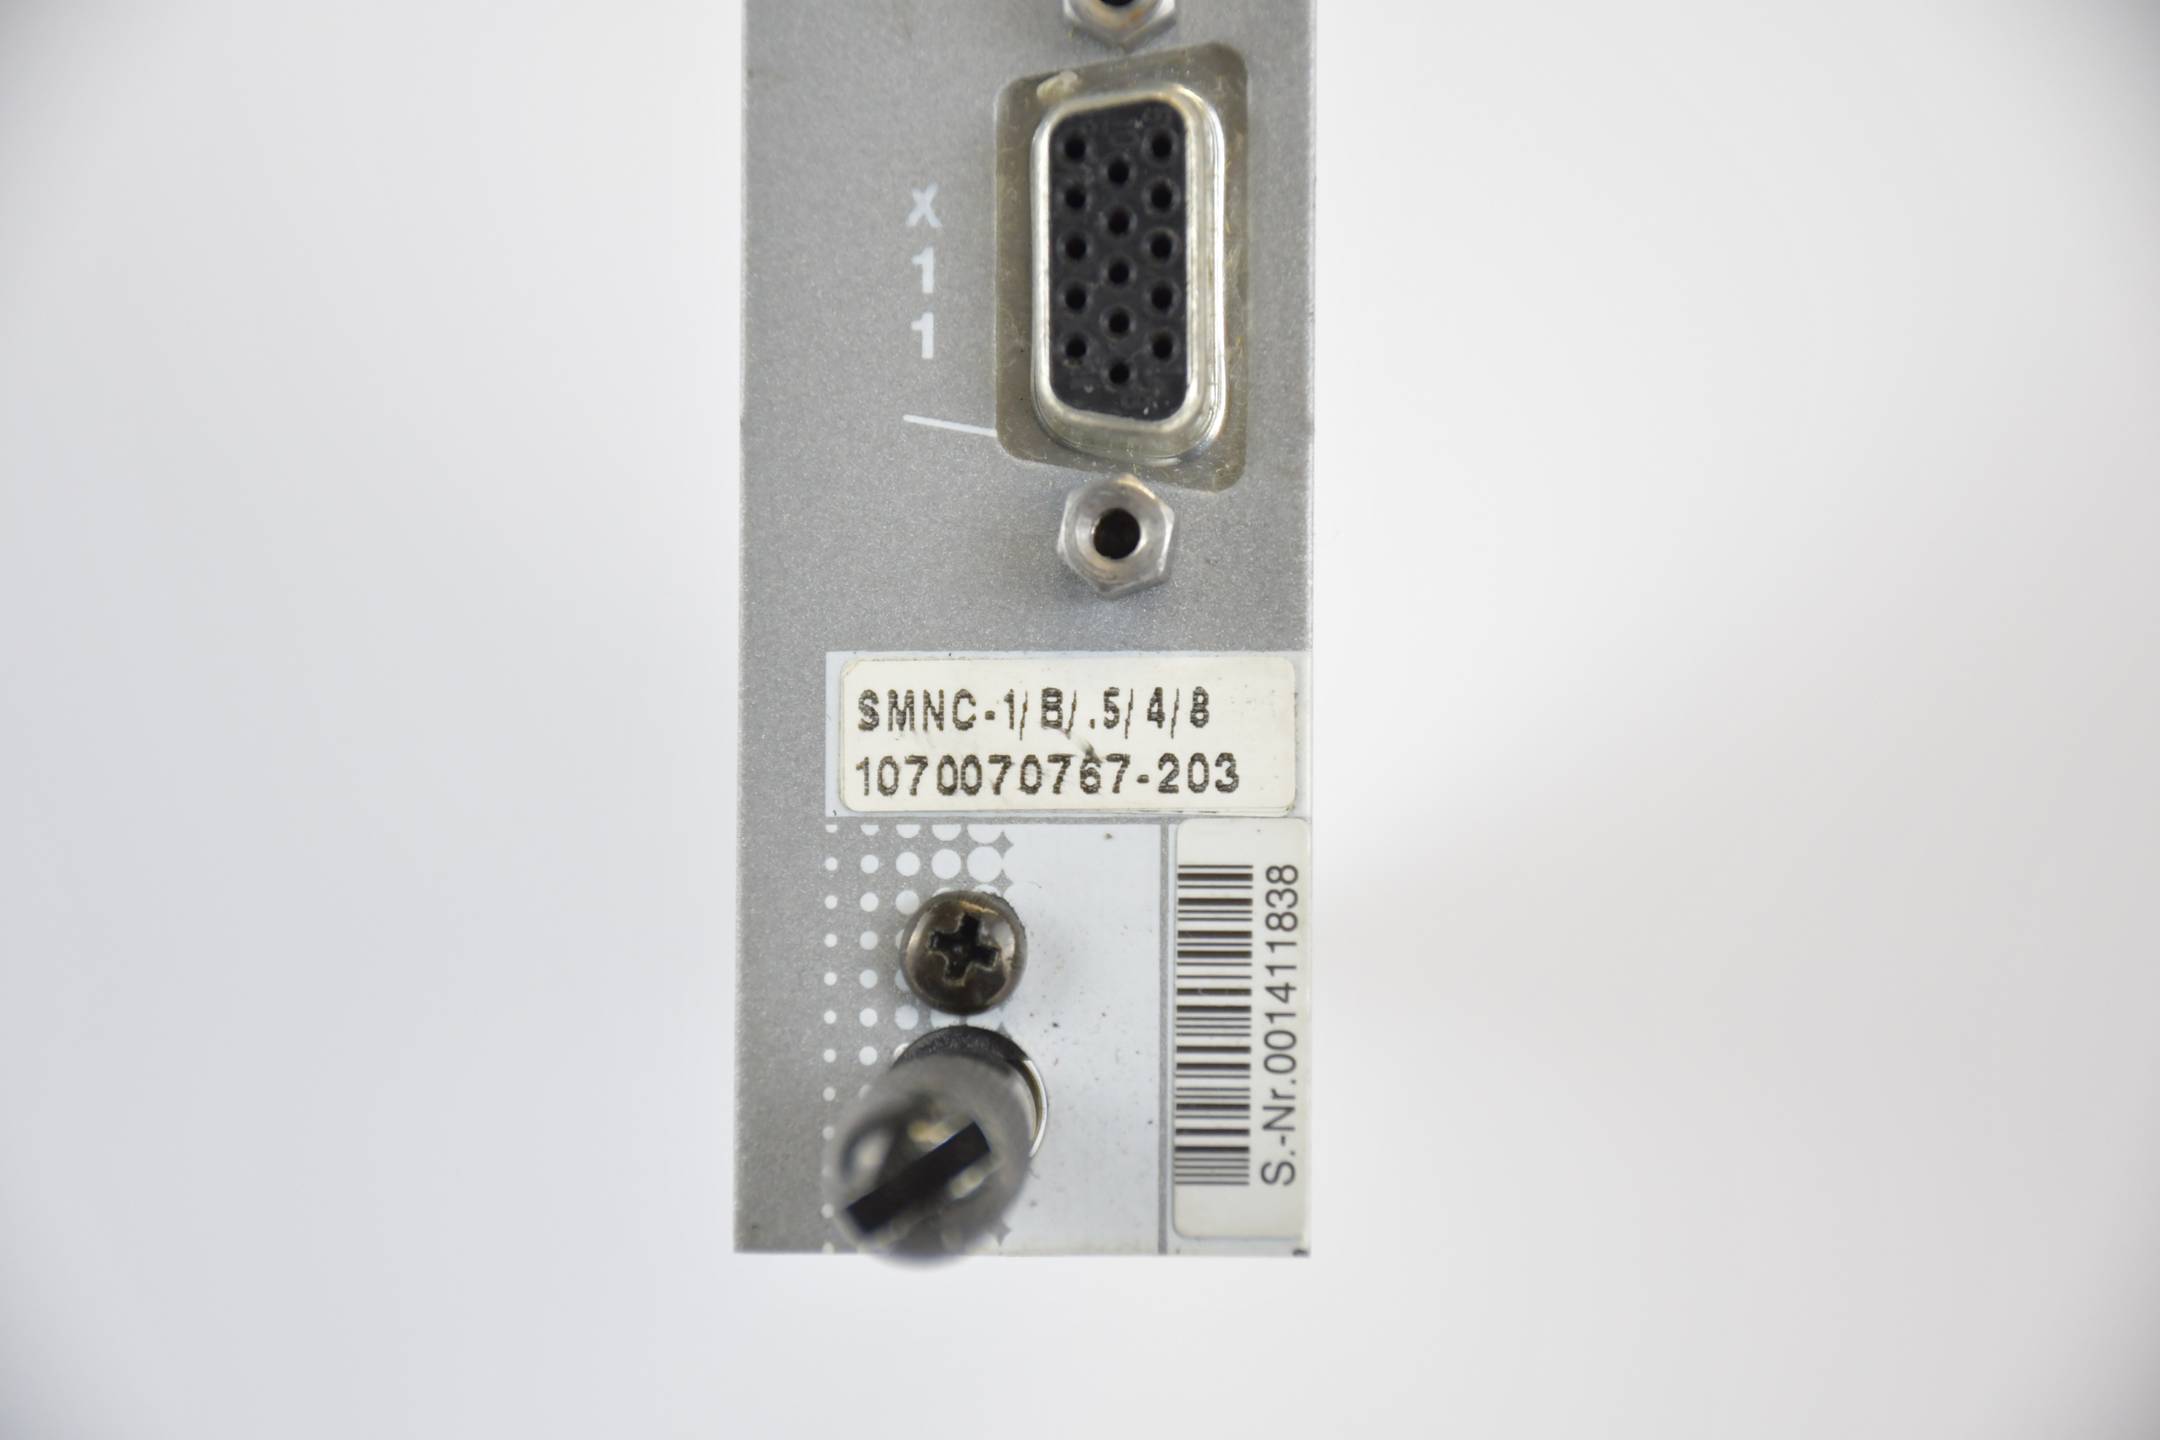 Bosch SMNC-1/B/.5/4/8 1070070767-203 inkl. 19000195 SC512KB Sram Memory Card